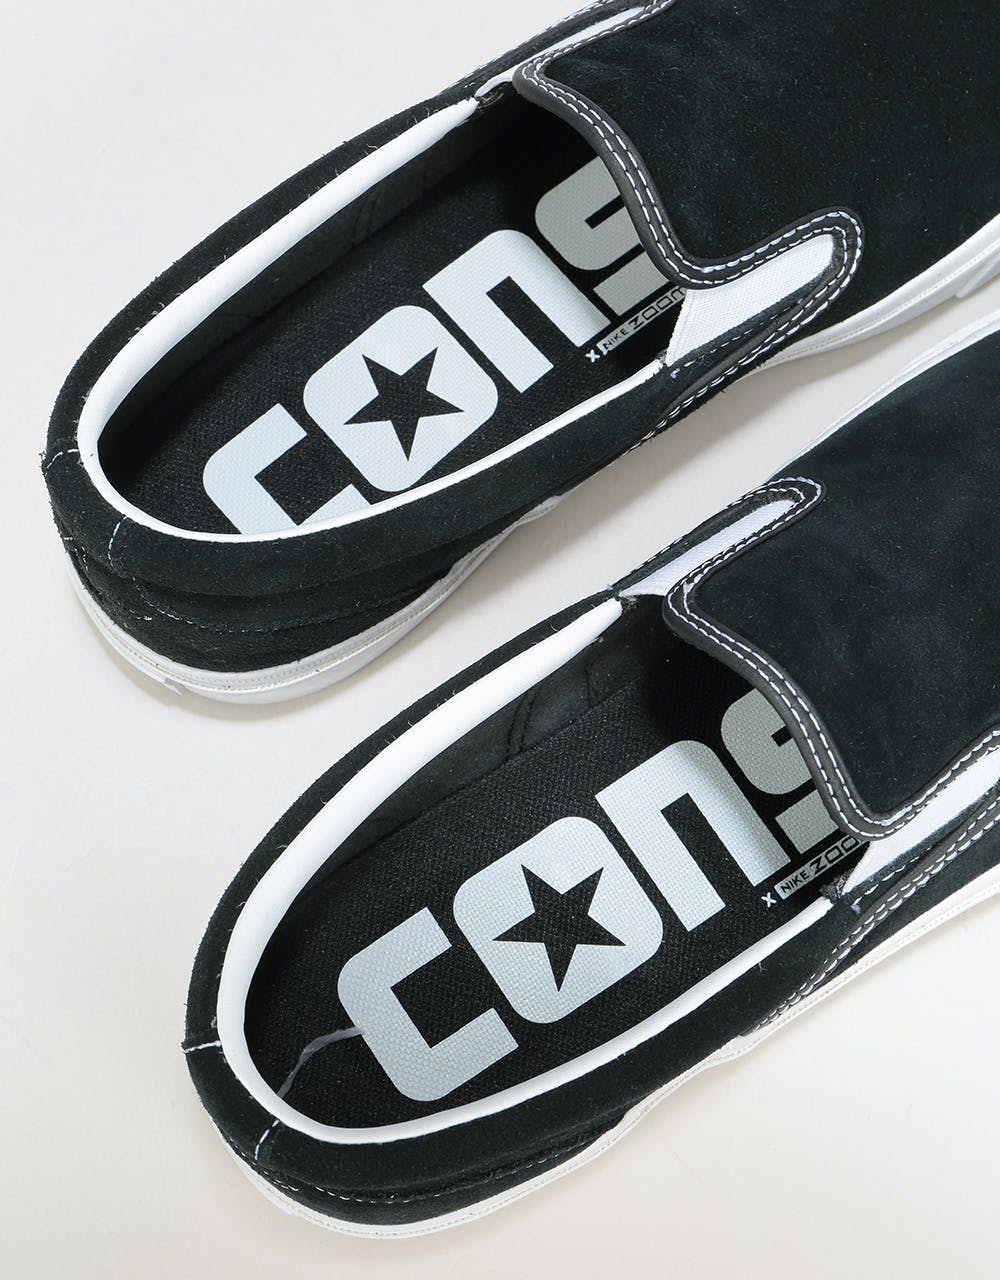 Converse One Star CC Slip Skate Shoes - Black/White/White